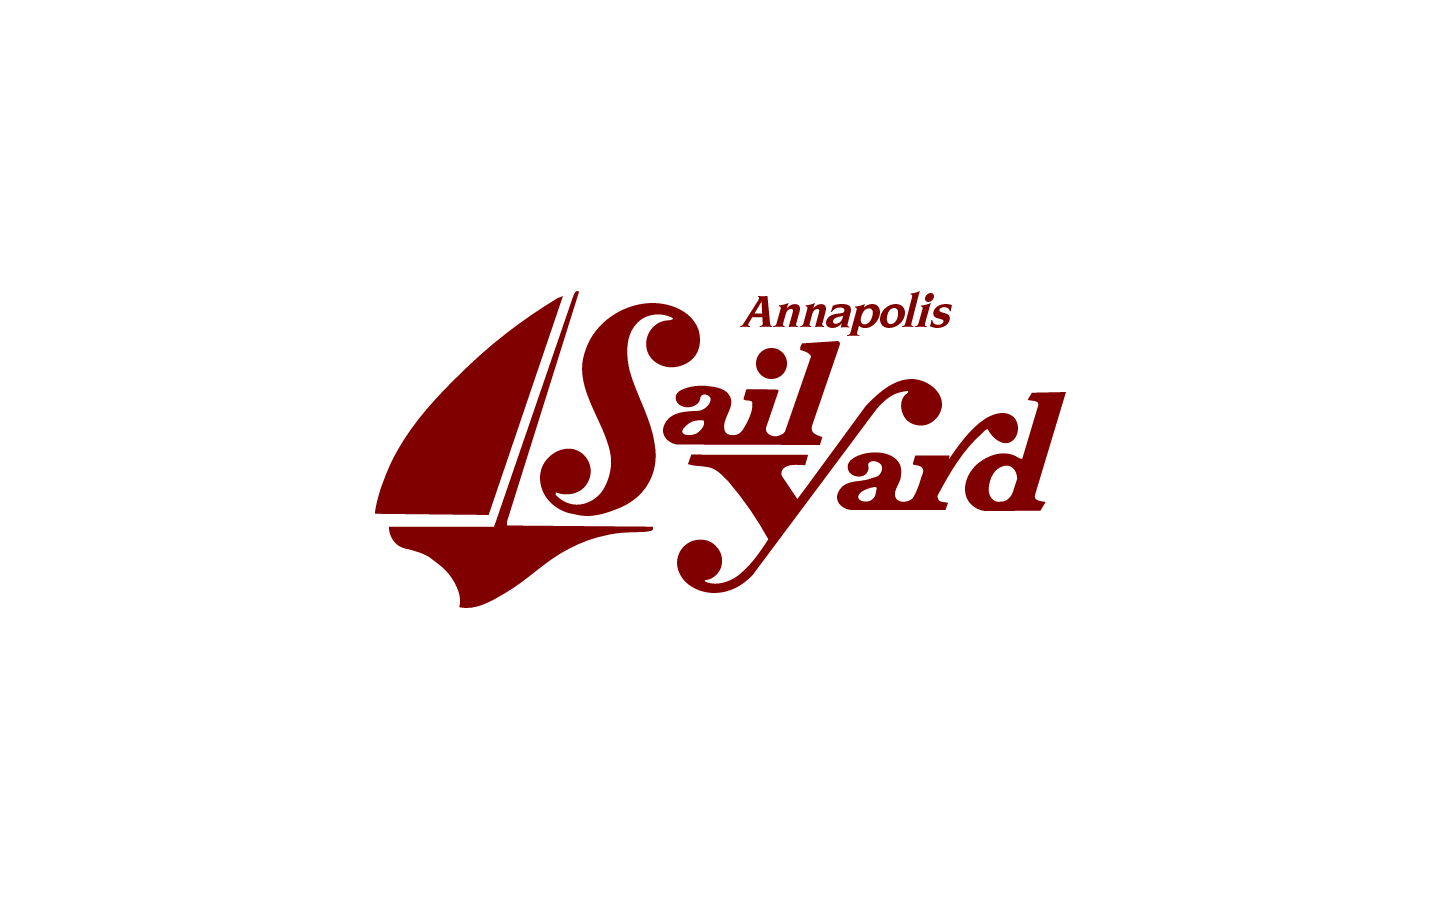 Annapolis Sailyard Inc